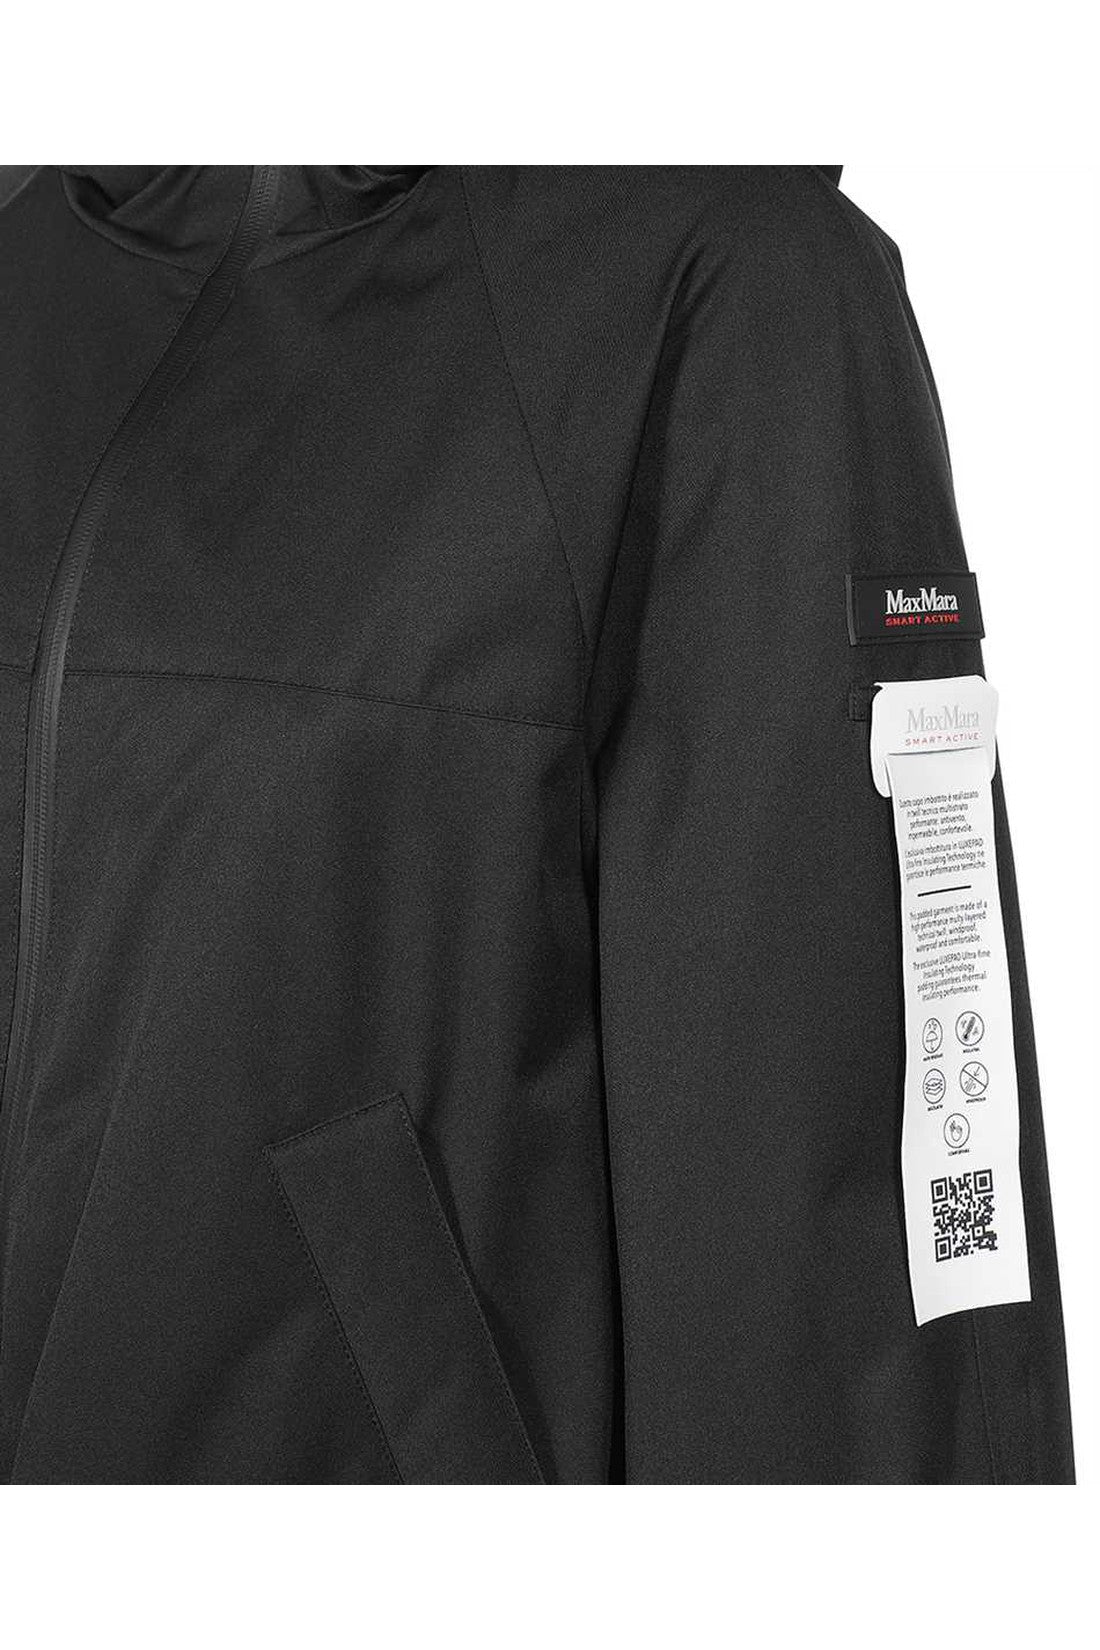 Full zip jacket-Max Mara-OUTLET-SALE-ARCHIVIST